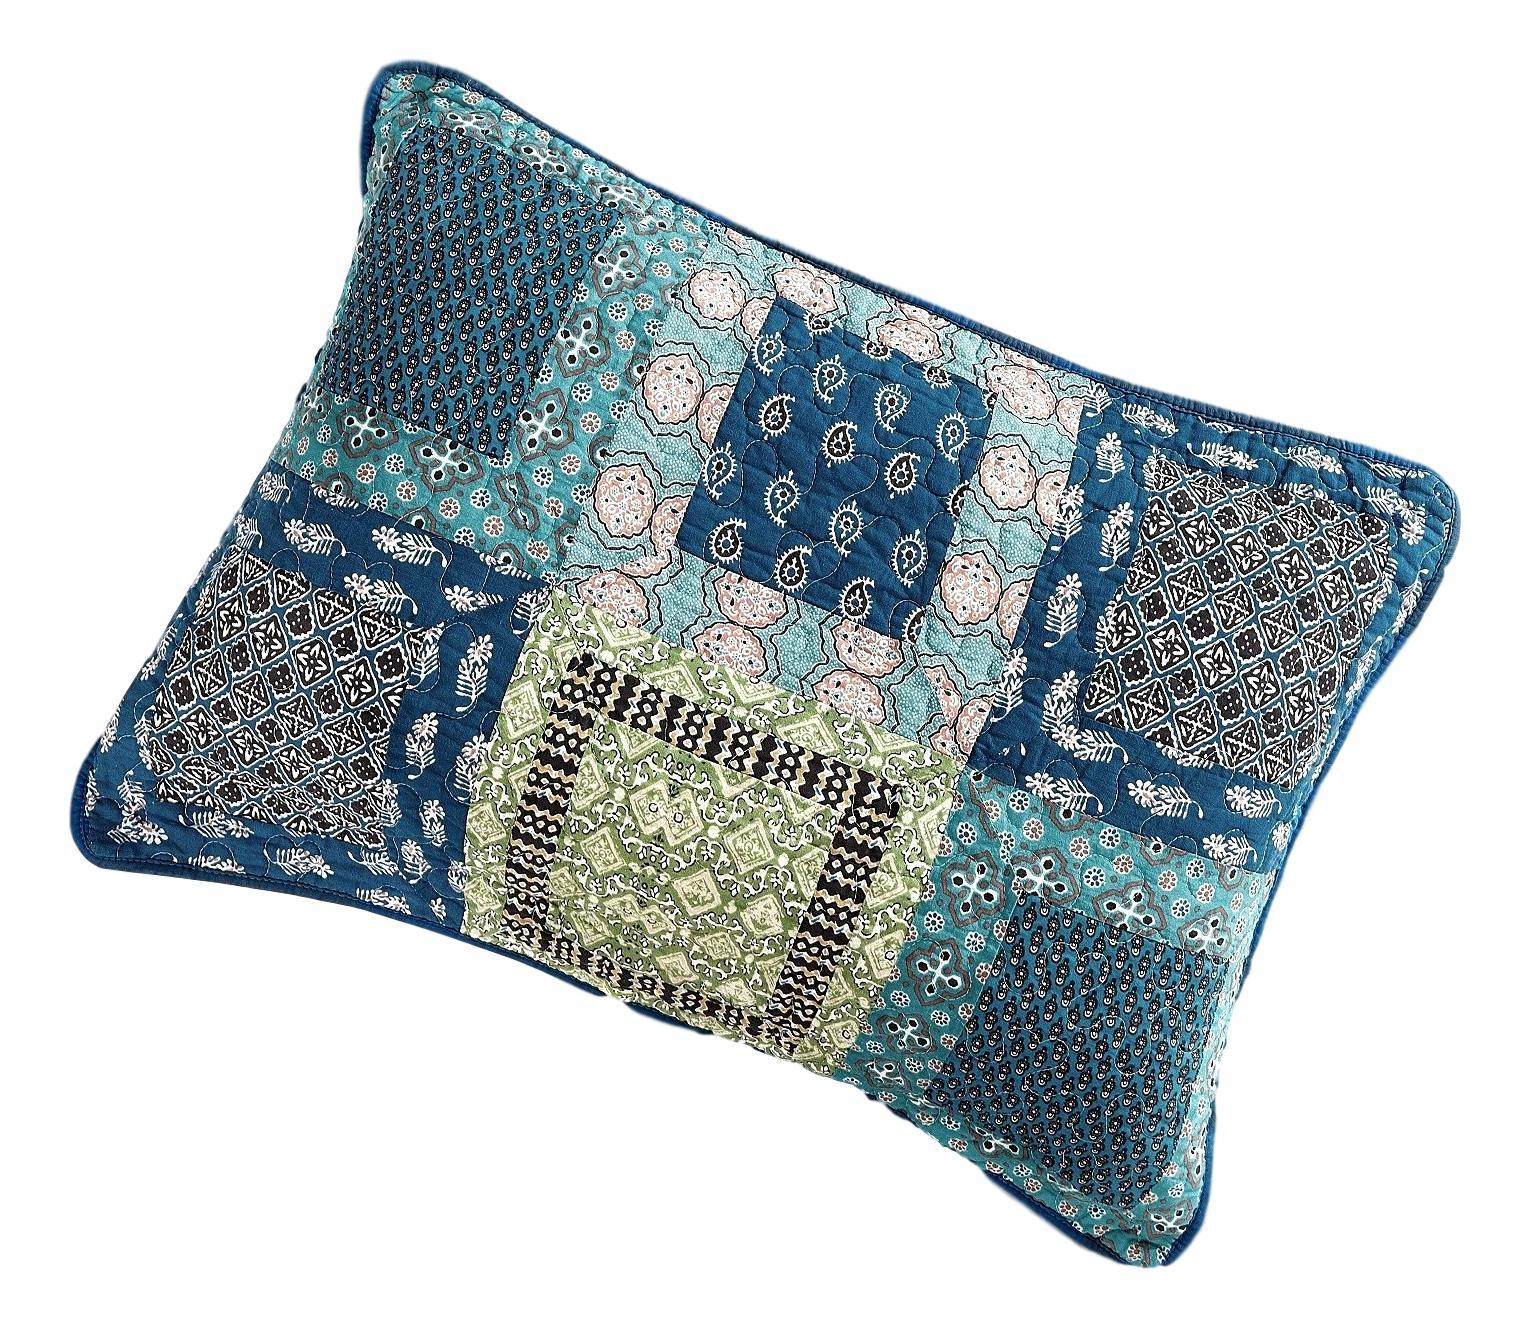 Tache Cotton Patchwork Teal Blue Green Paisley Bohemian Ocean Pillow Sham (JHW-888) - Tache Home Fashion